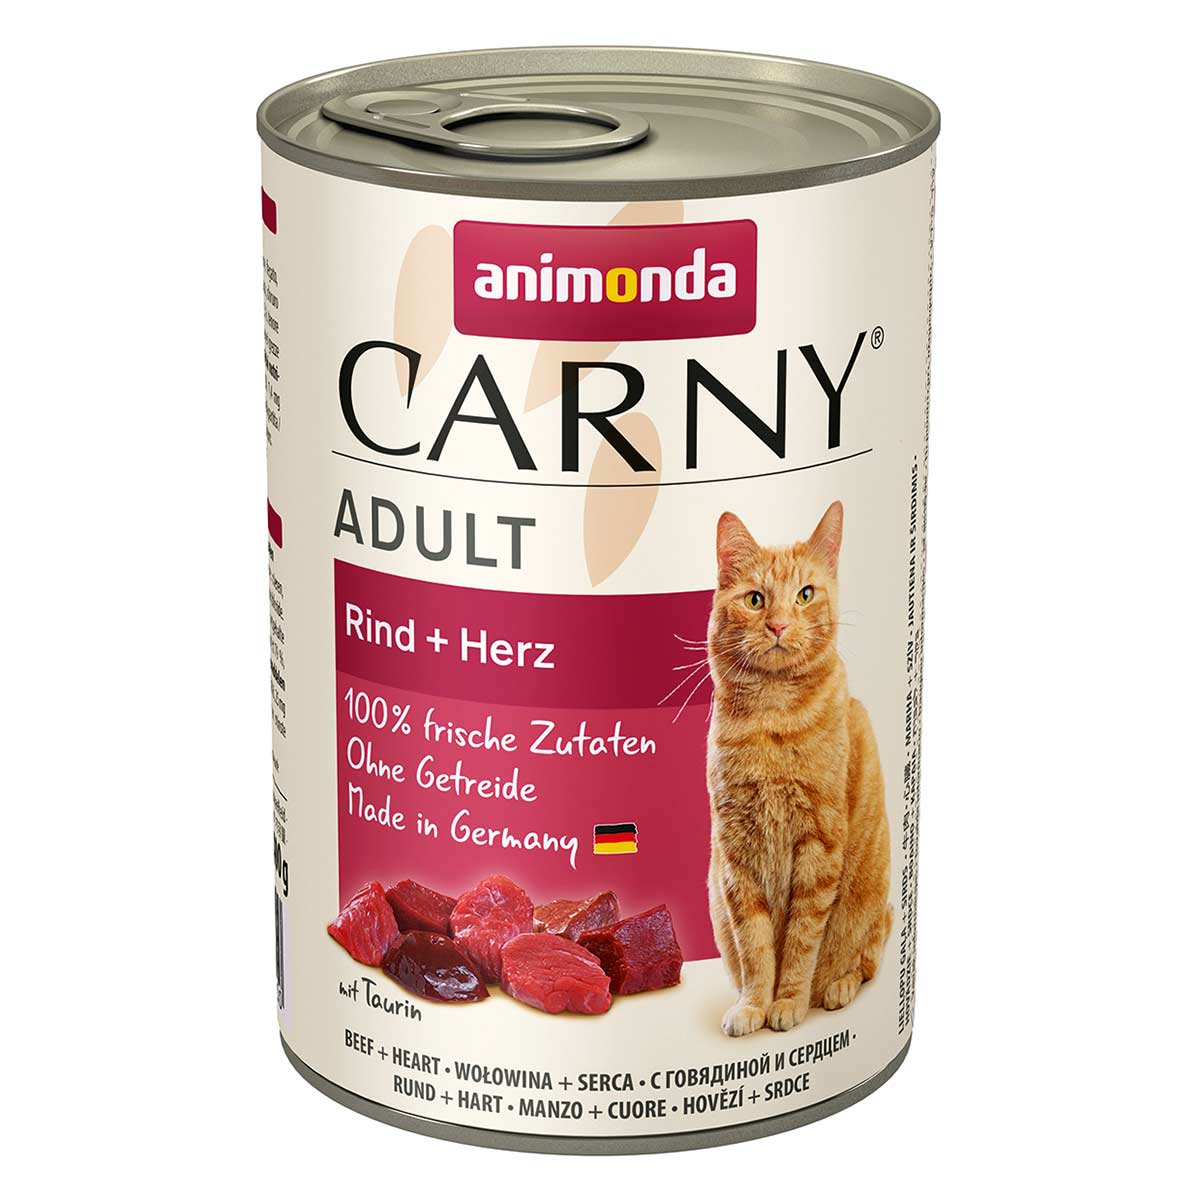 animonda Carny Adult Rind und Herz 24x400g von animonda Carny